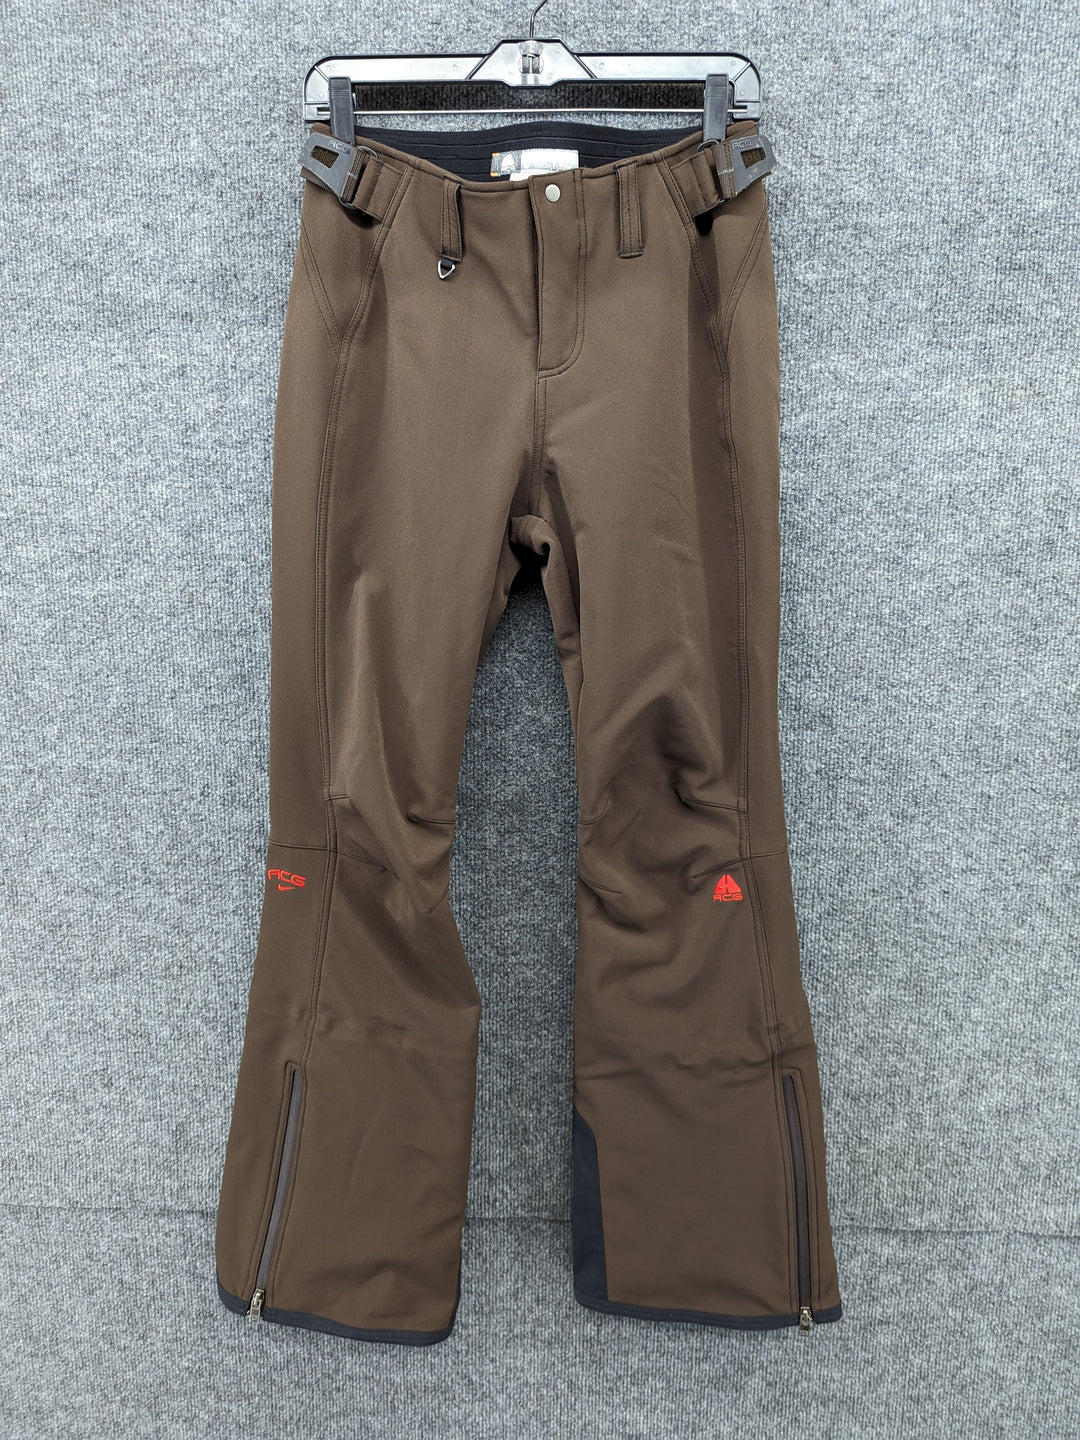 Nike Size Medium Men's Softshell Pants – Rambleraven Gear Trader